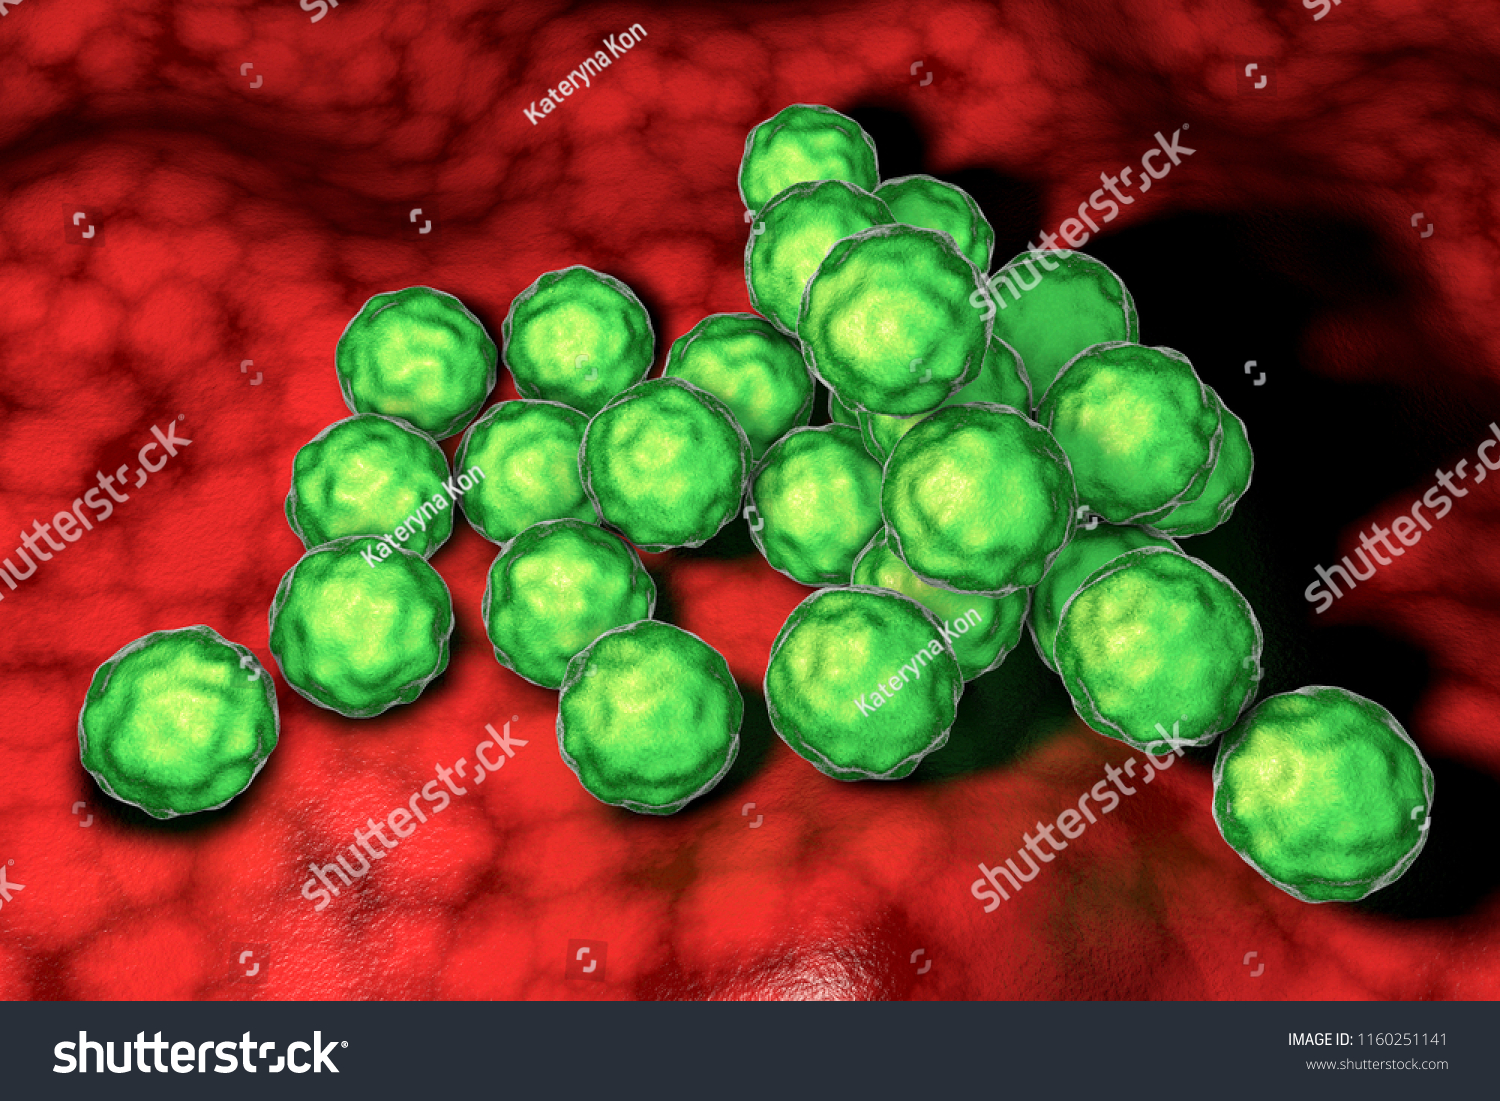 Chlamydia Trachomatis Bacteria 3d Illustration Causative Ilustración De Stock 1160251141 7612